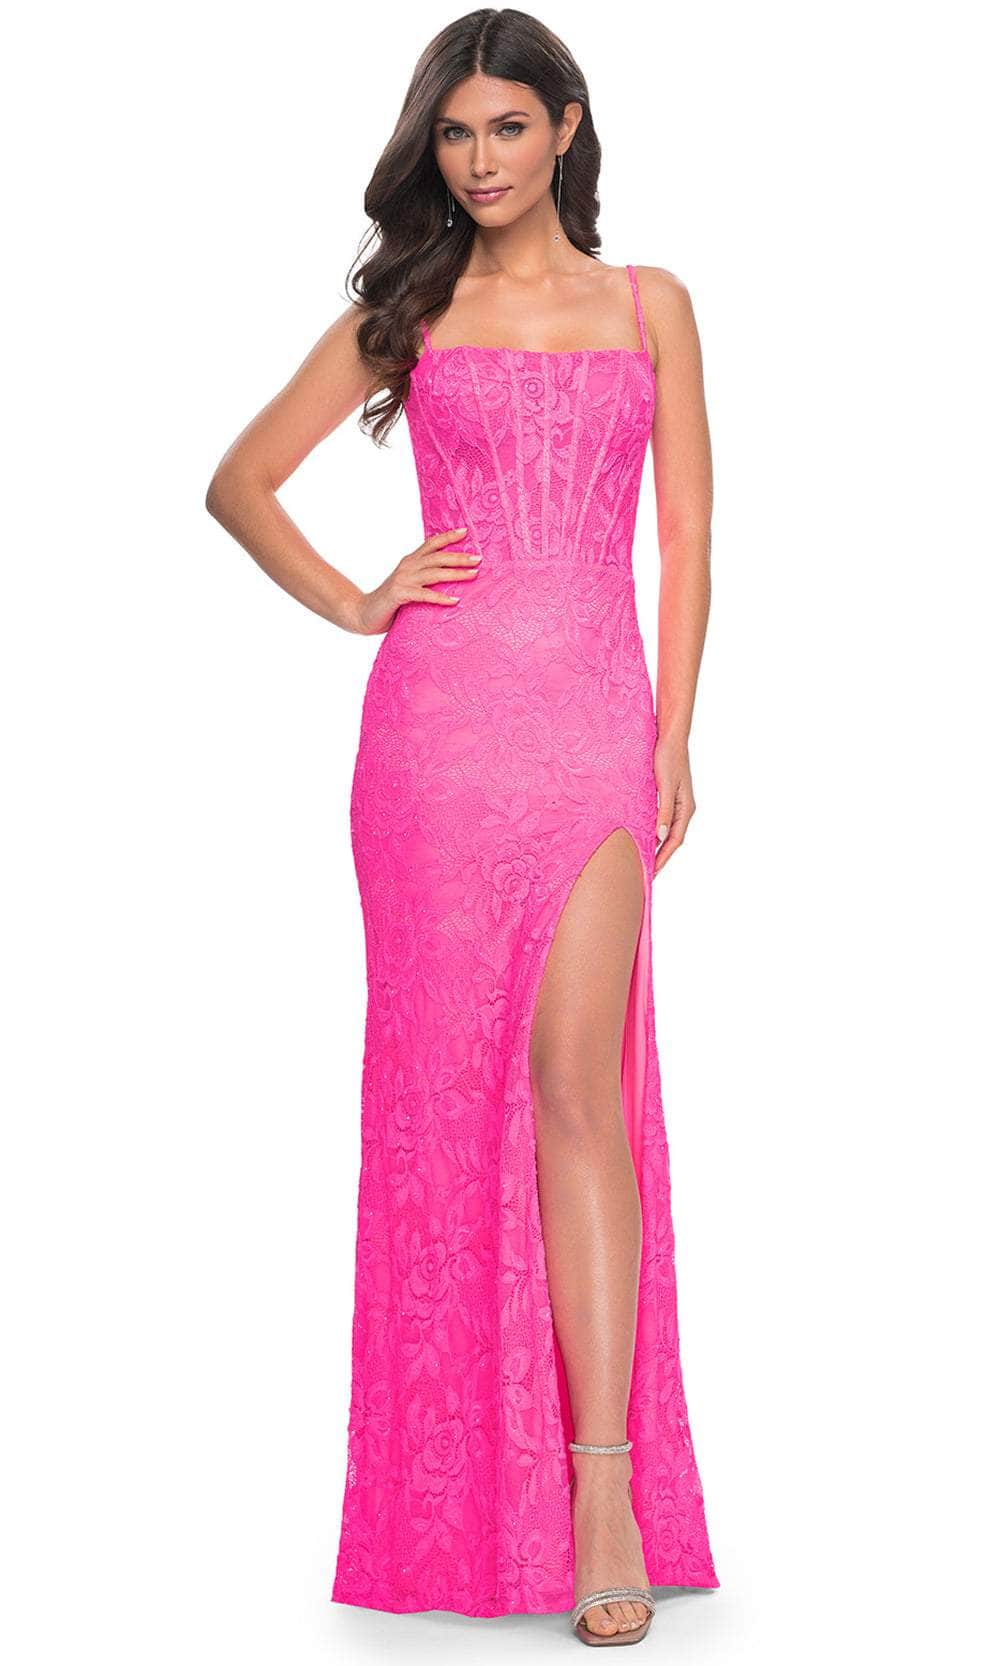 La Femme 32423 - Lace Corset Prom Dress Prom Dresses 00 / Neon Pink